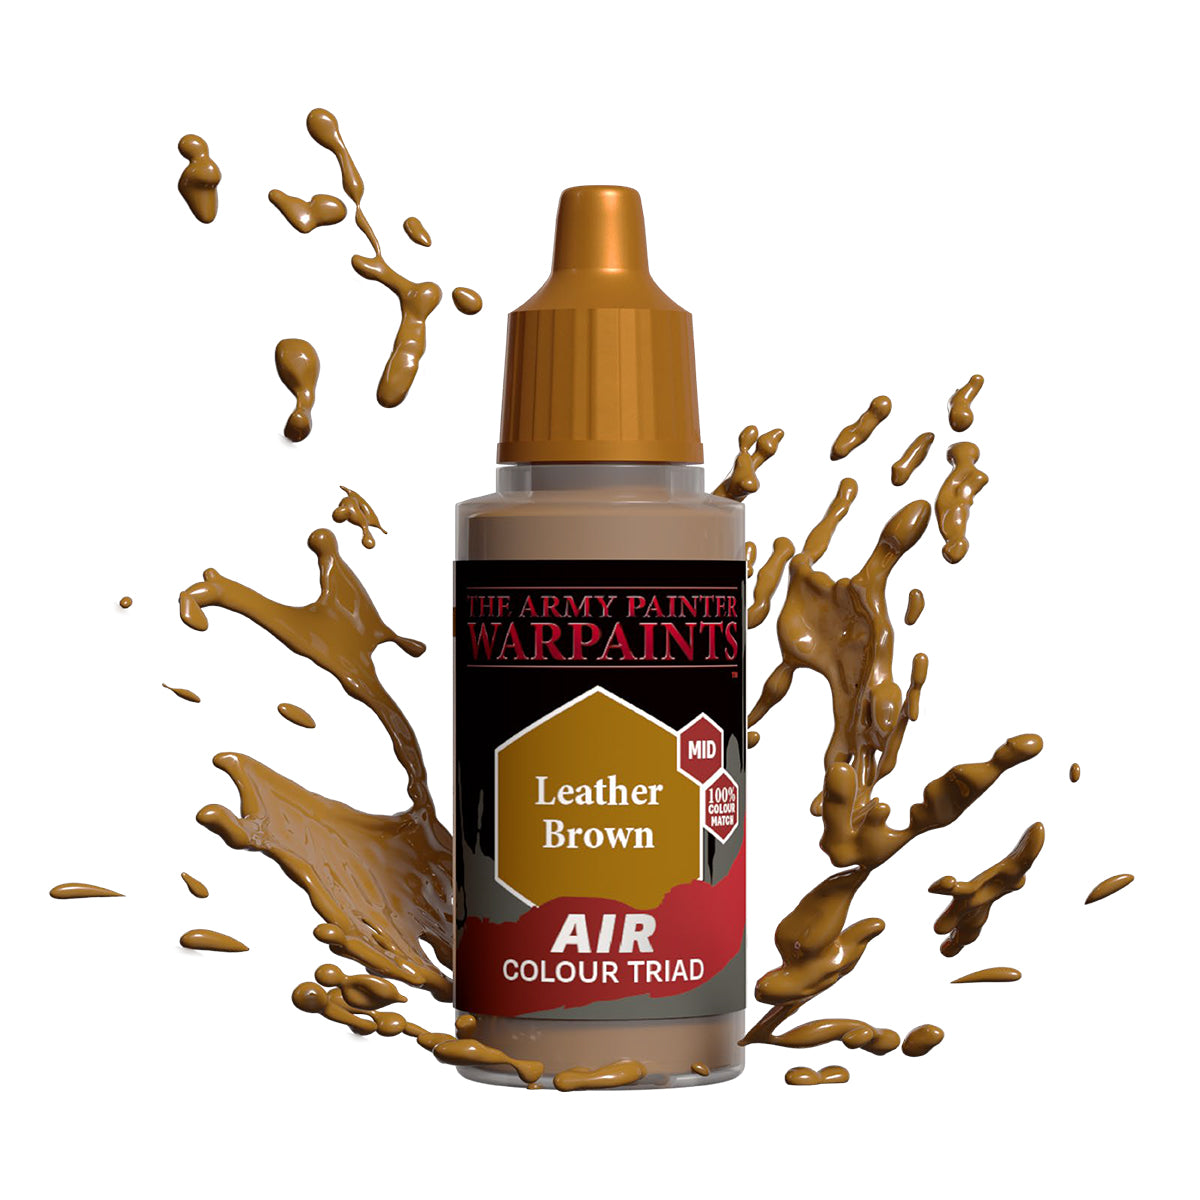 Warpaints Air: Leather Brown